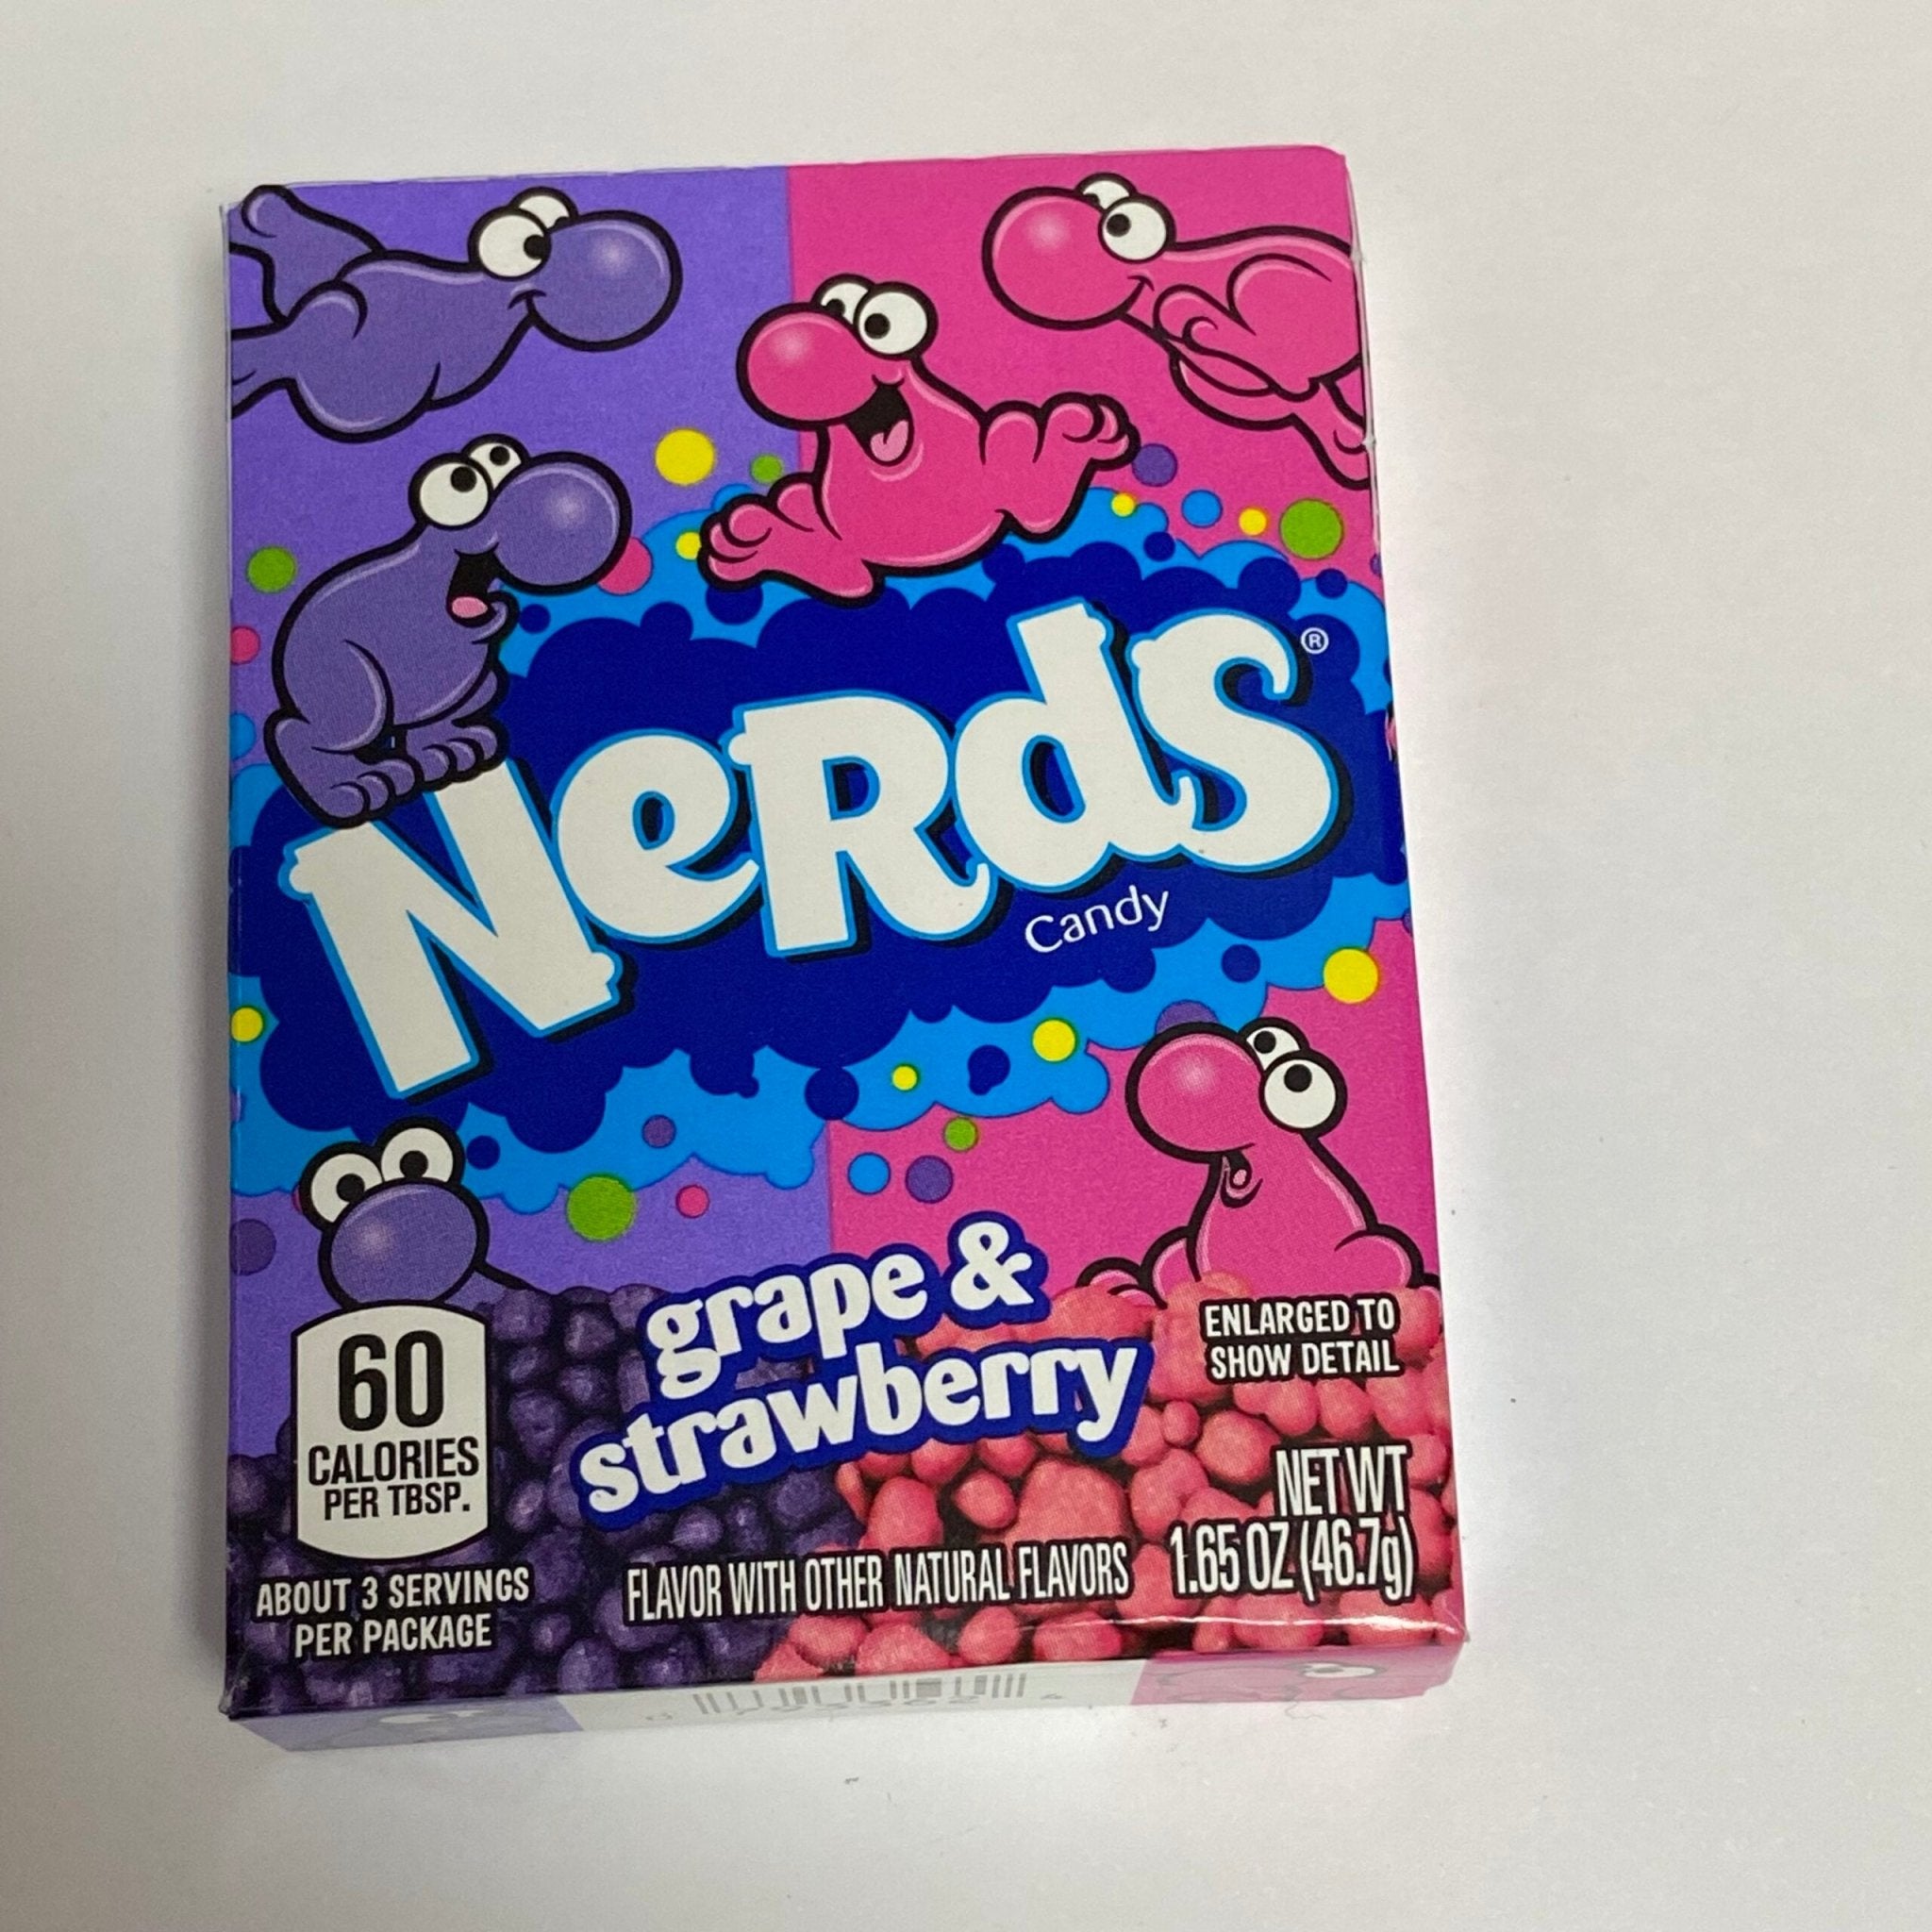 Wonka nerds grape & strawberry - Dream Candy